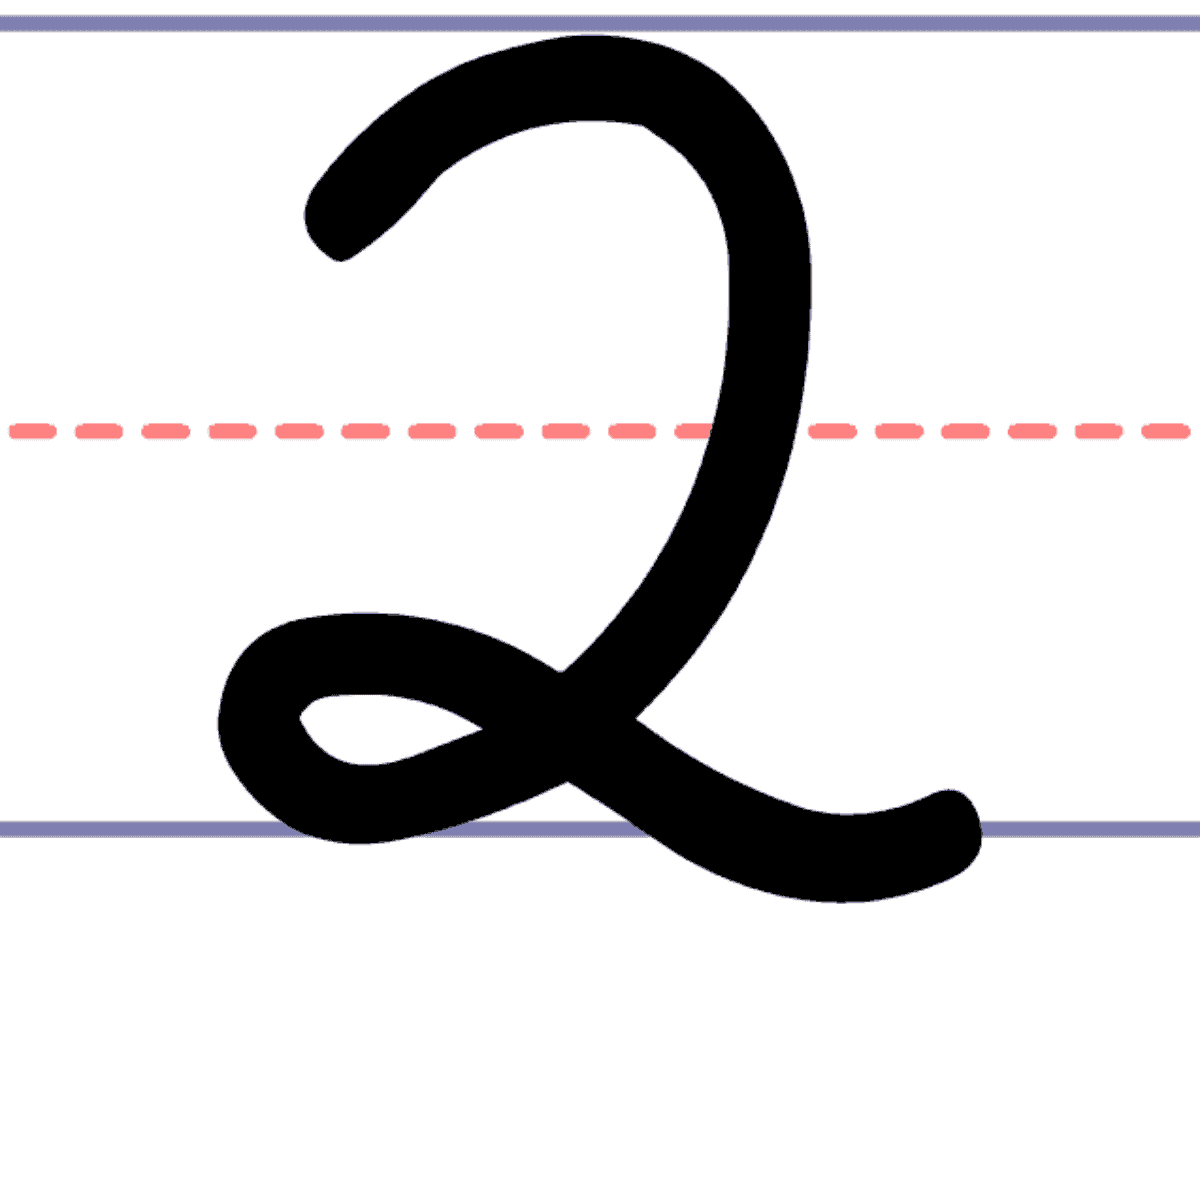 capital q in cursive